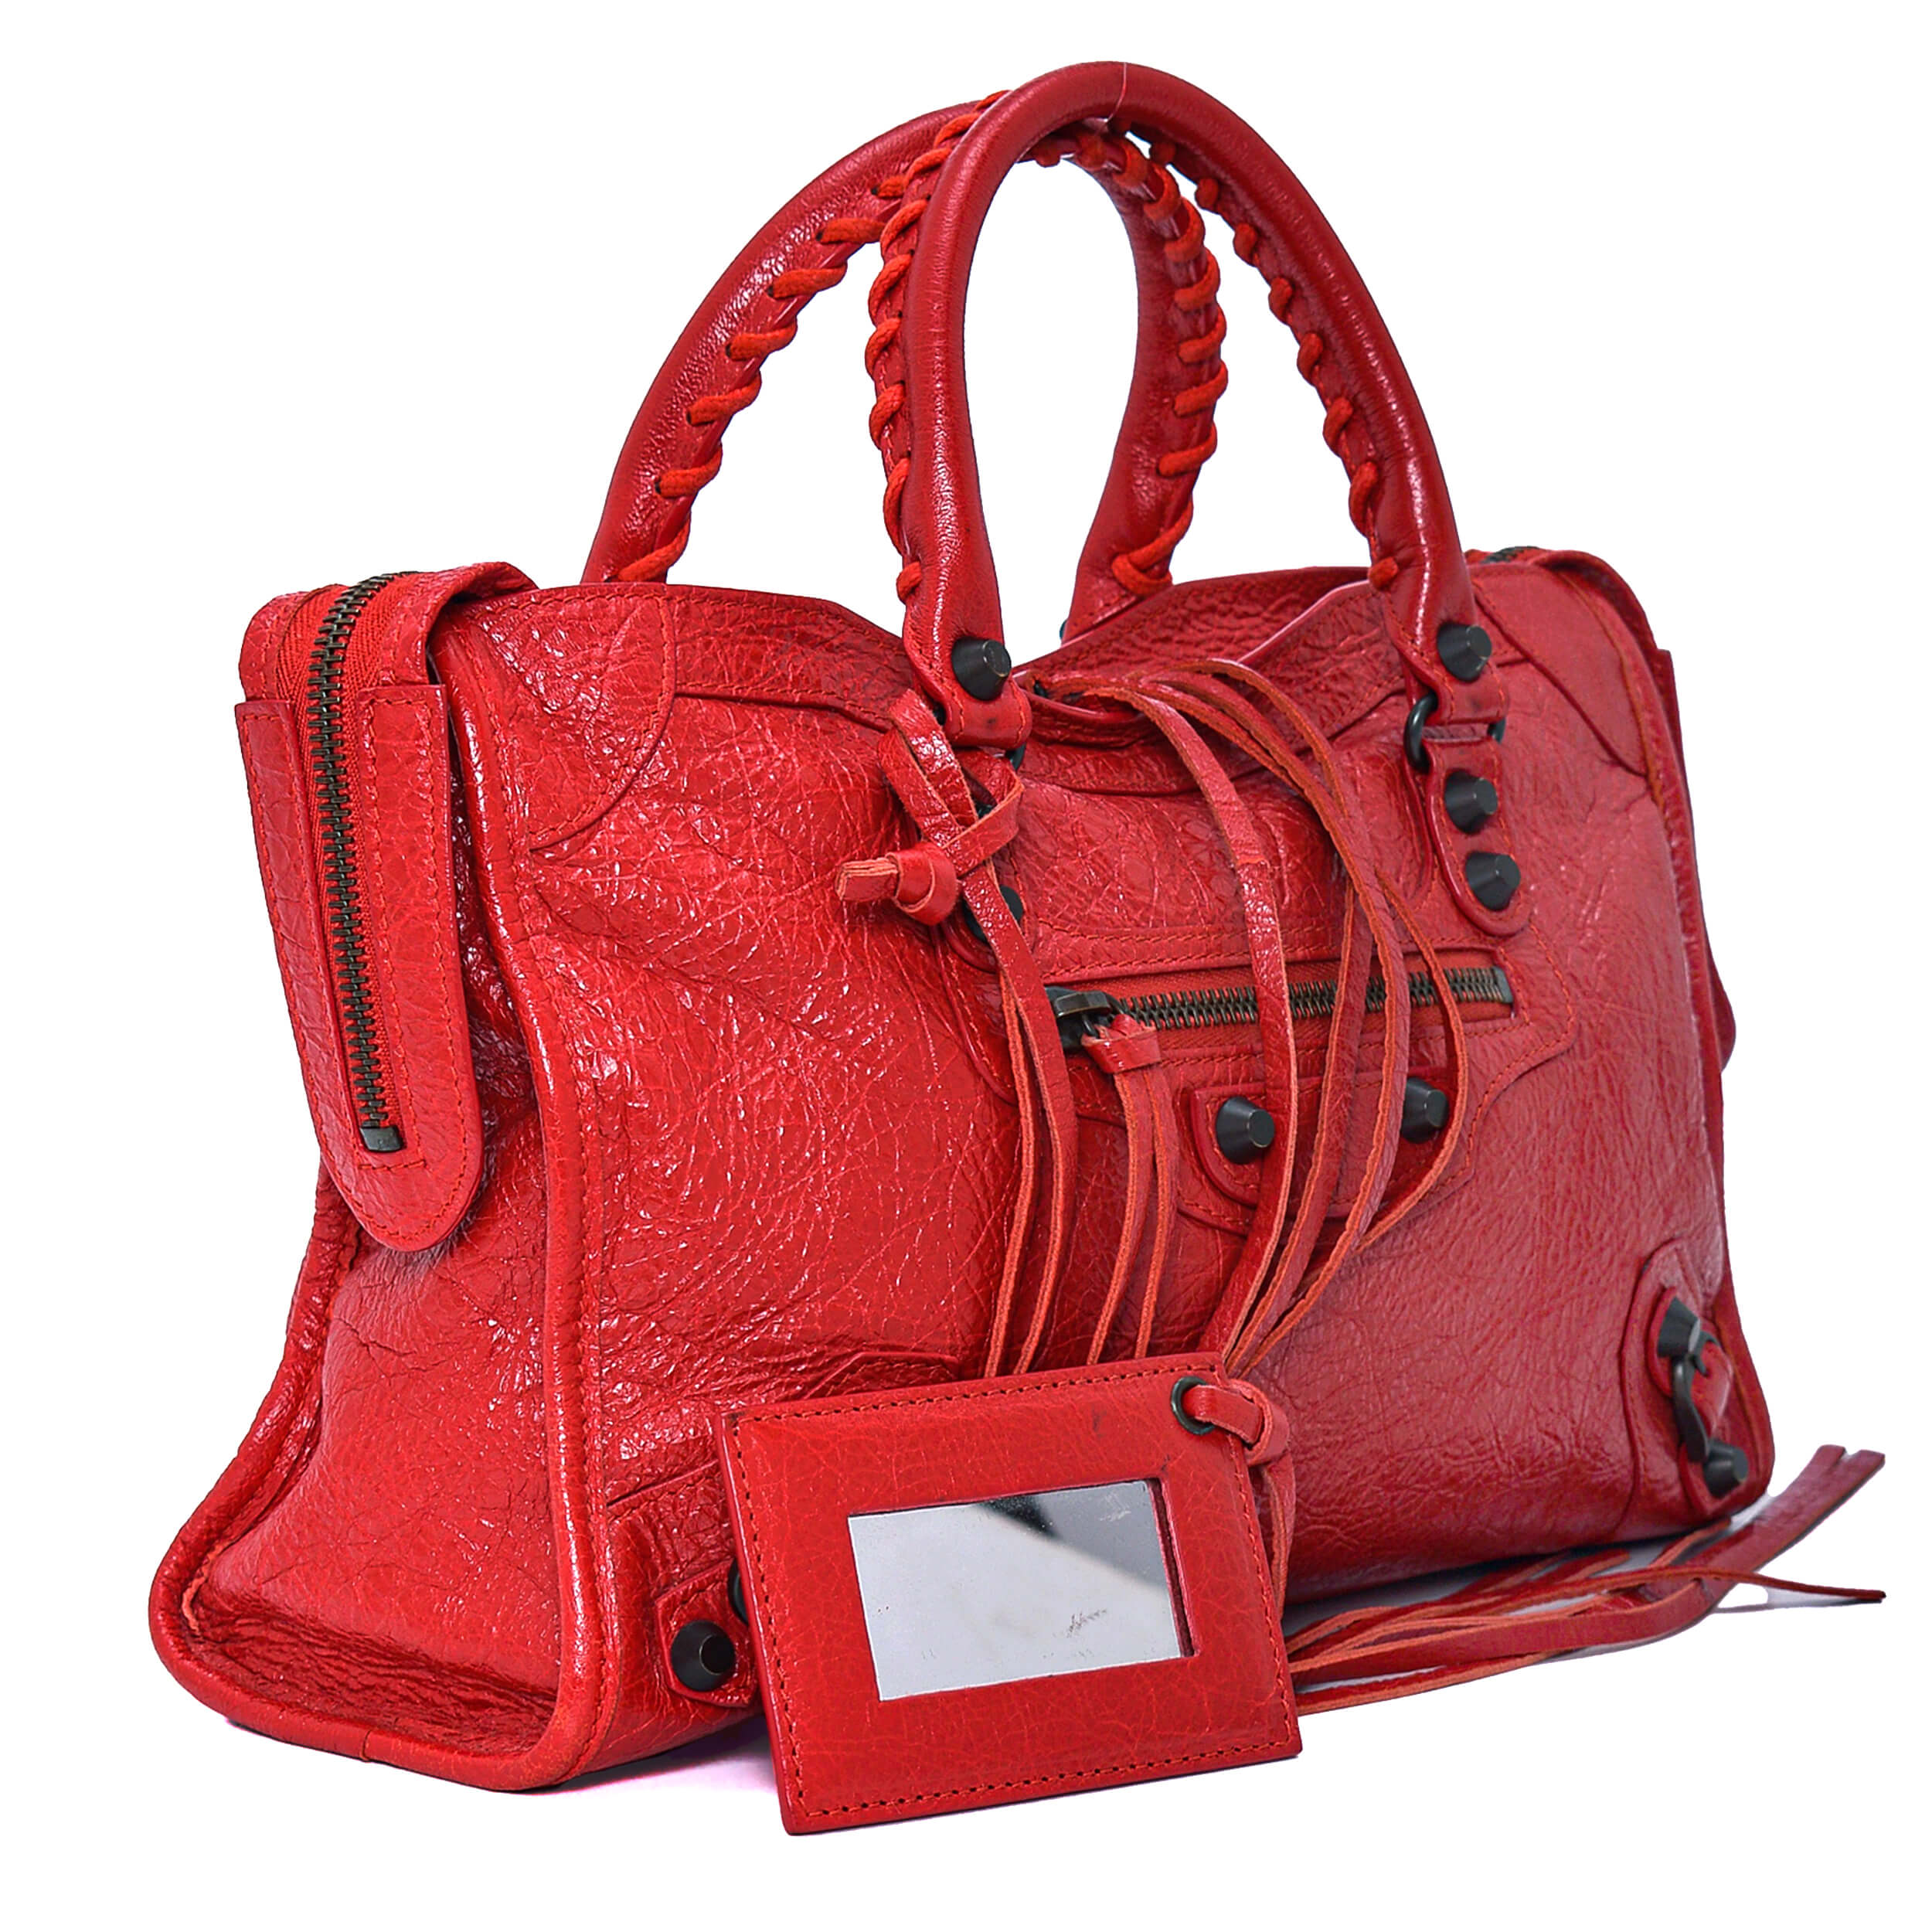 Balenciaga - Red Calfskin Leather Motorcyle Le City Small Bag